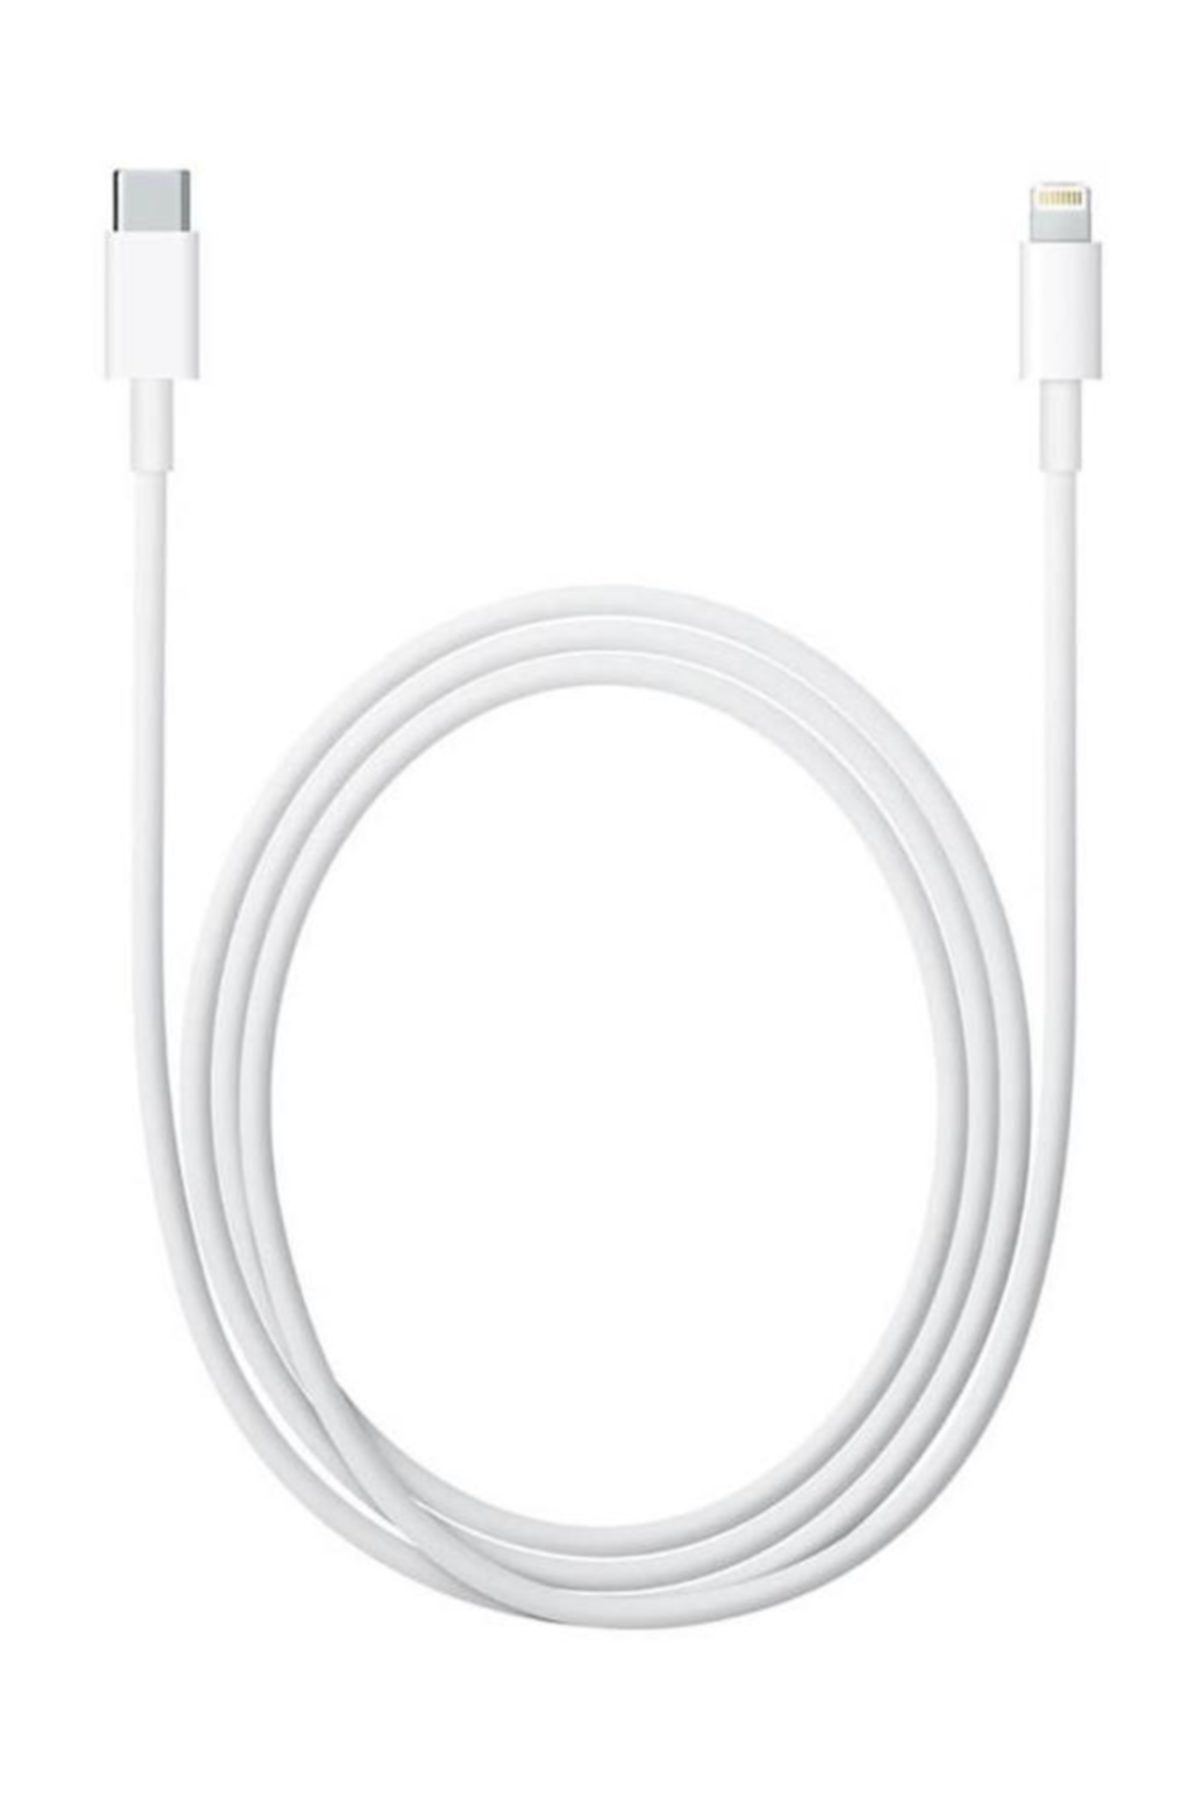 Joyroom Apple Usb-c To Lightning Şarj Kablosu (1m) Mqgj2zm/a